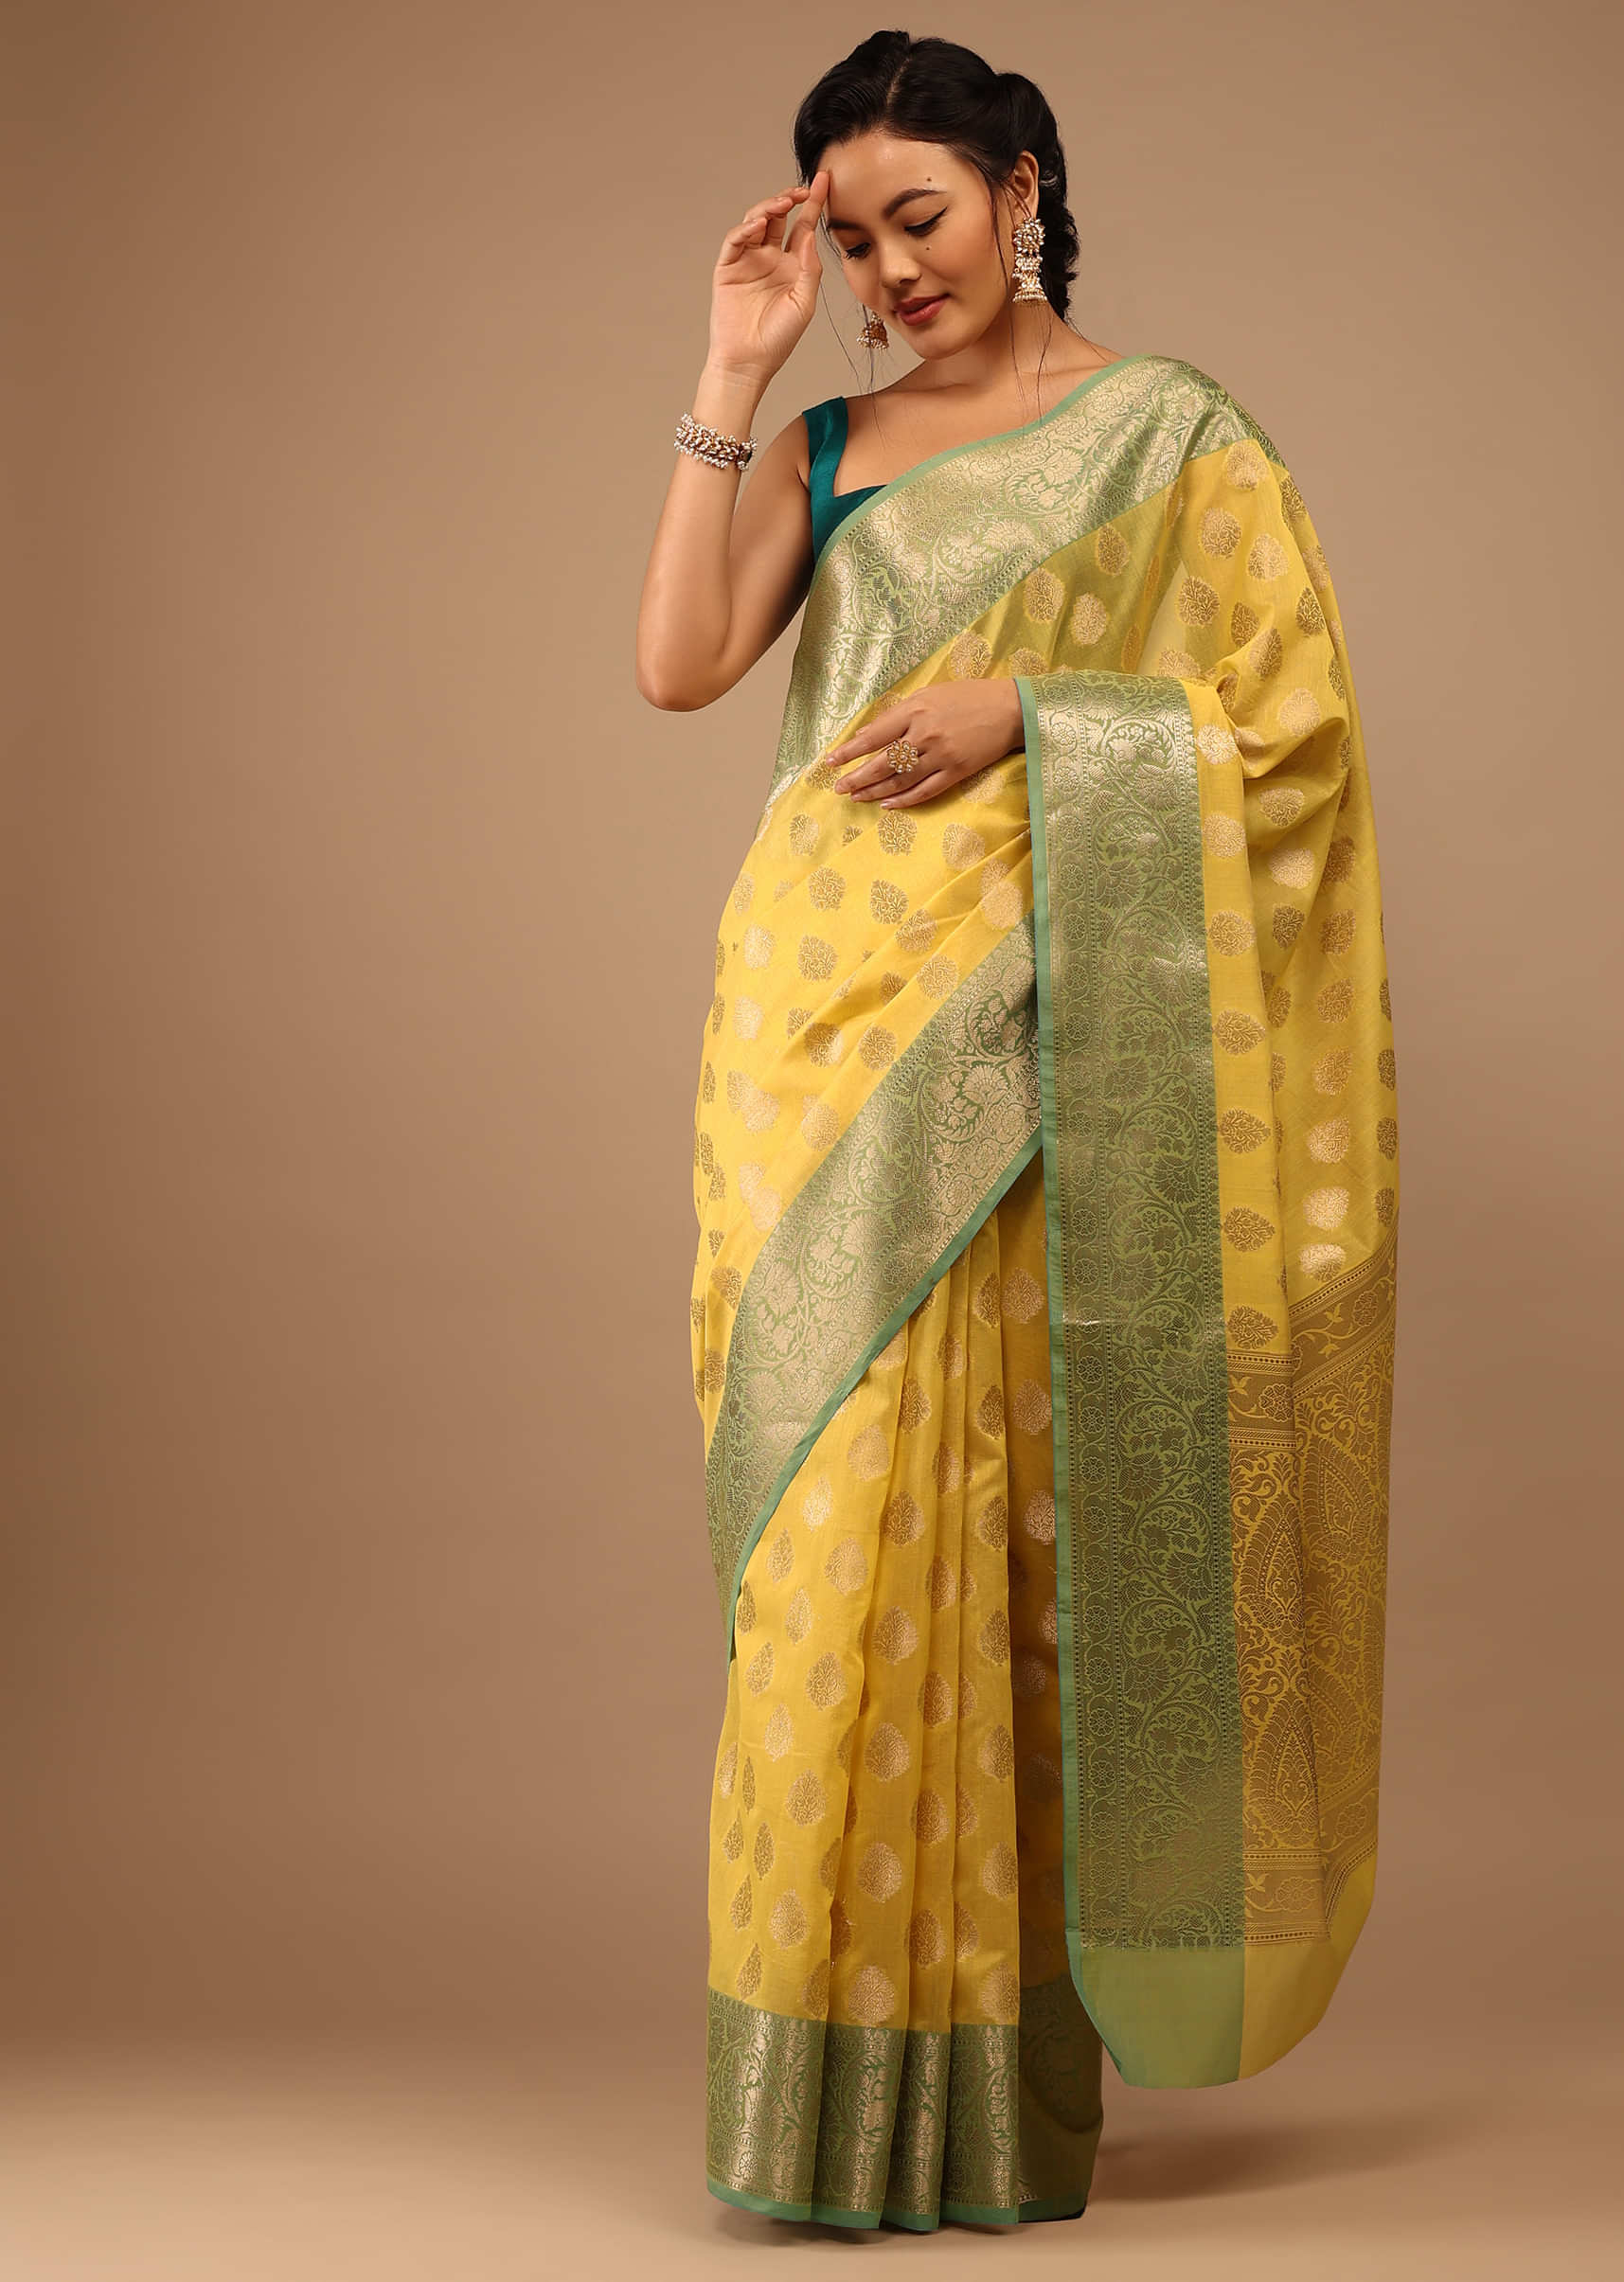 Freesia Yellow Saree In Banarsi Chanderi And Pure Handloom Cotton